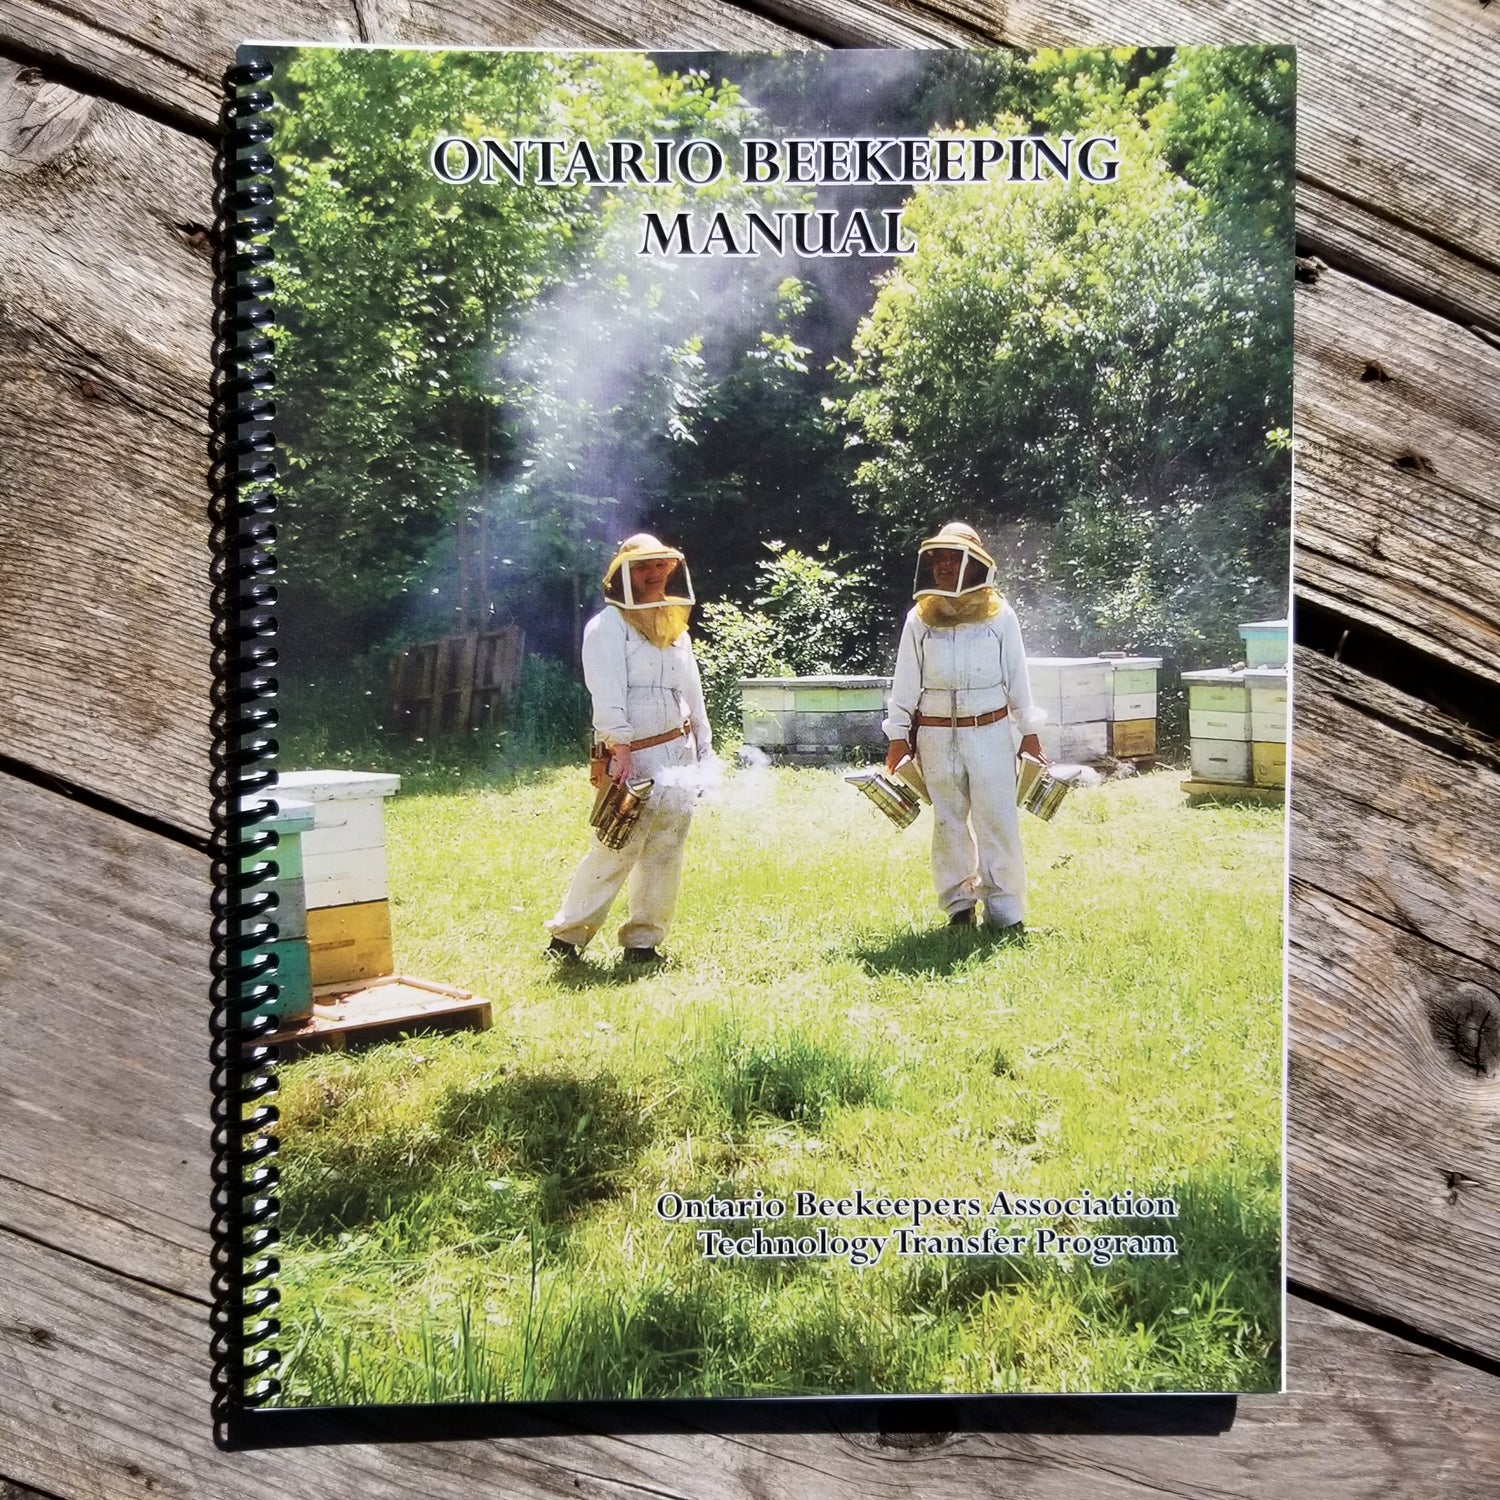 Ontario Beekeeping Manual - cover photo